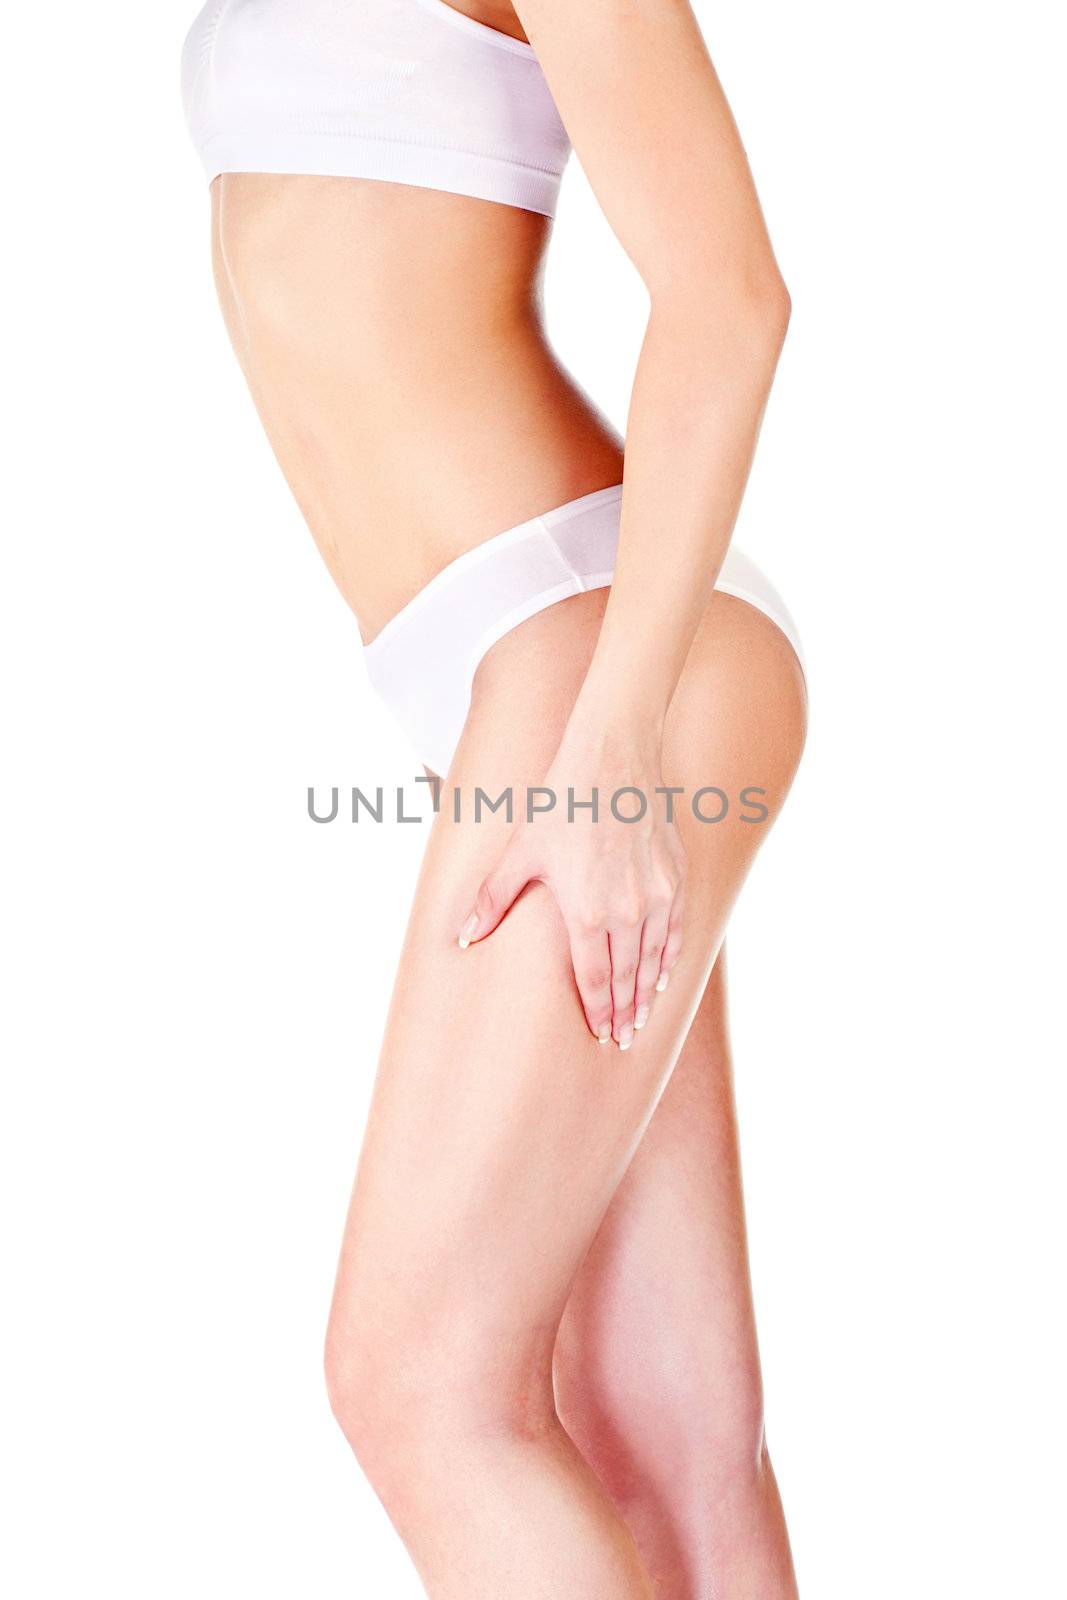 Woman pinching leg for skin fold test by imarin